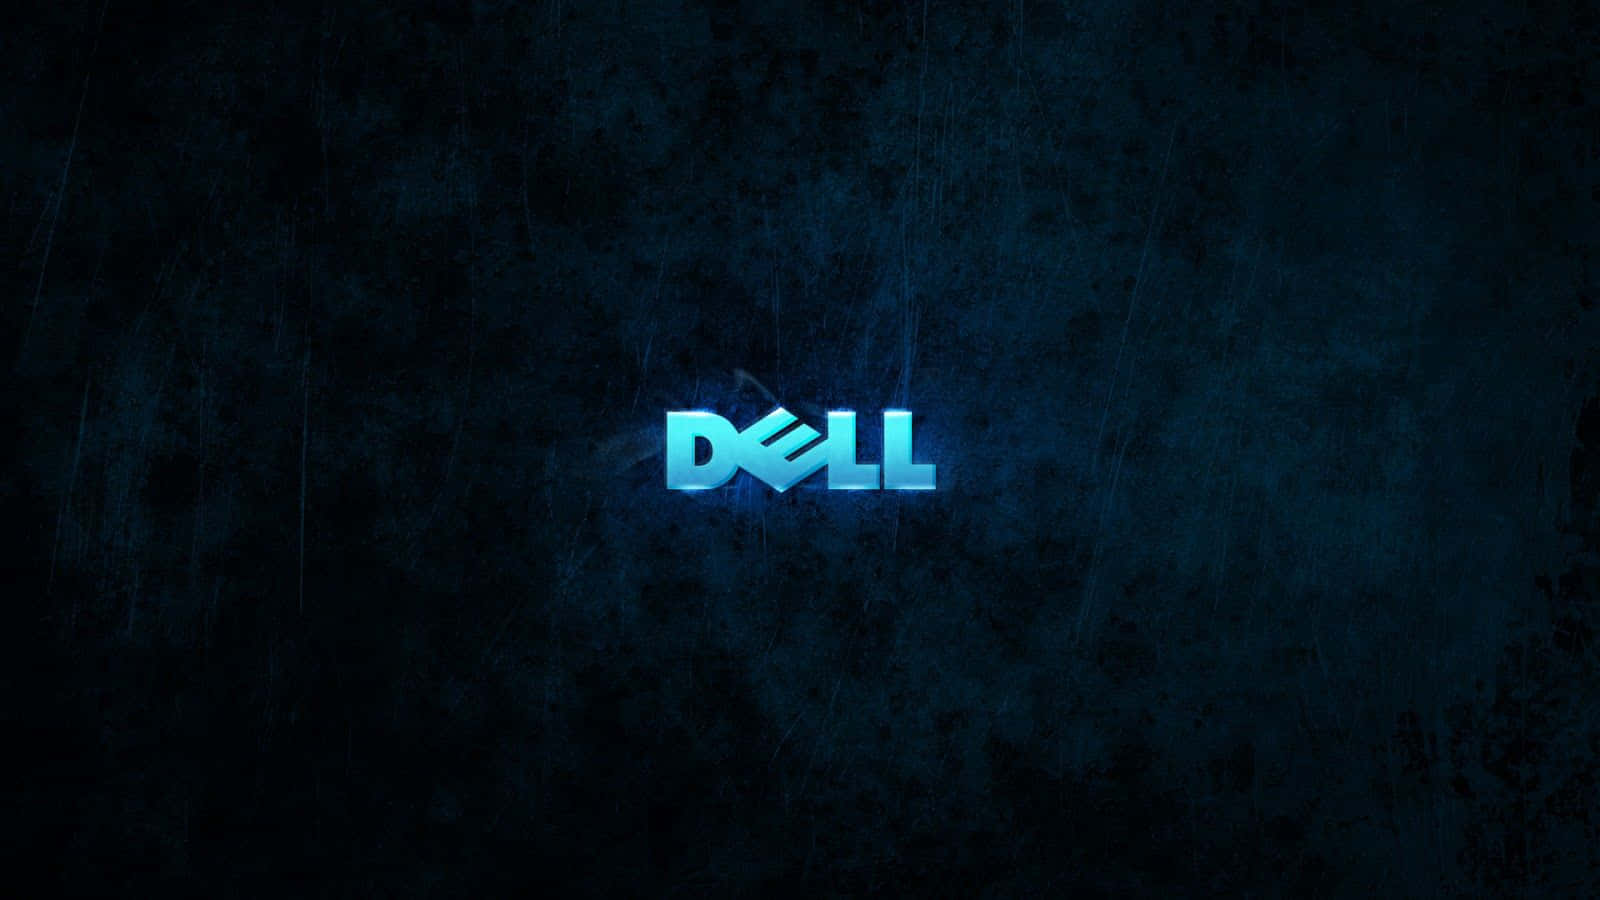 Dell Logo On A Dark Background